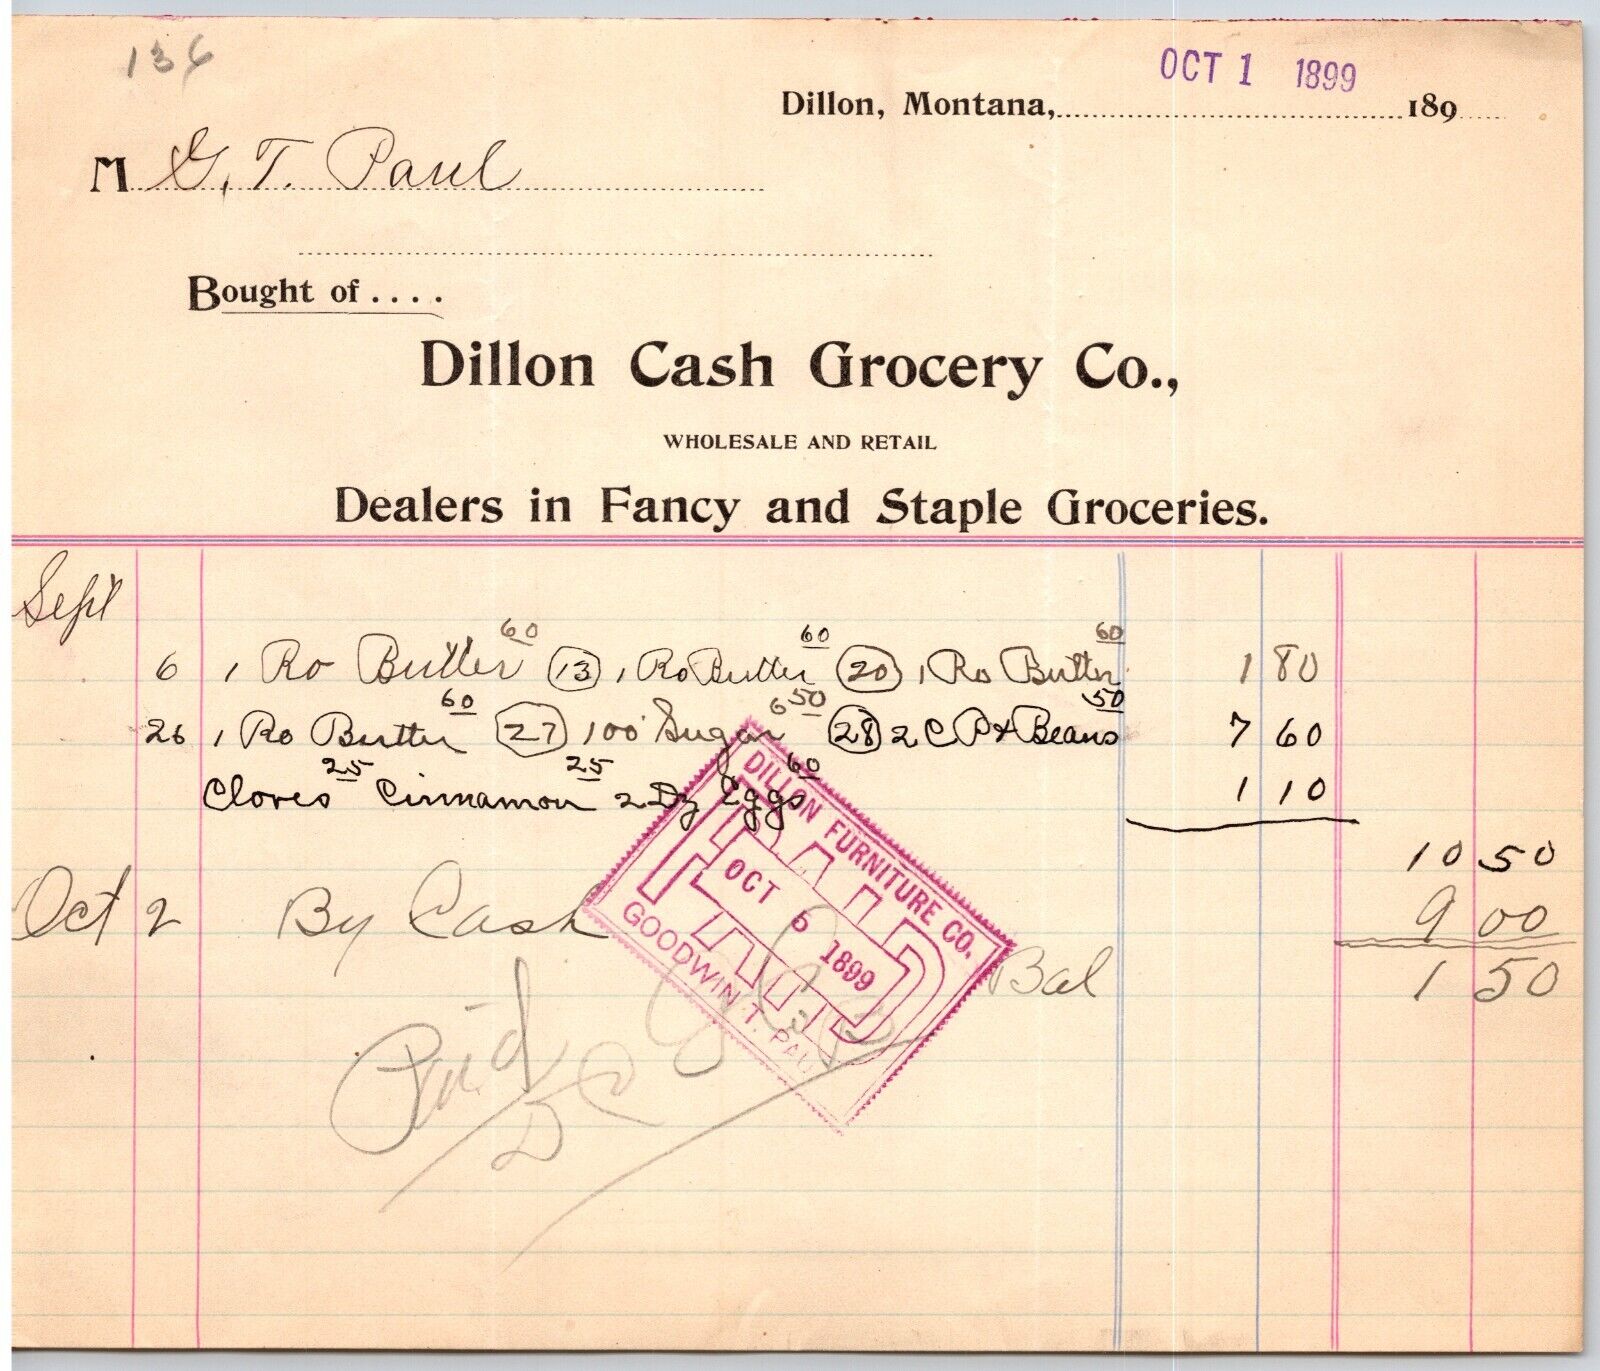 Dillon, MT Dillon Cash Grocery Co Fancy Groceries Oct 1 1899 Billhead G.T. Paul*